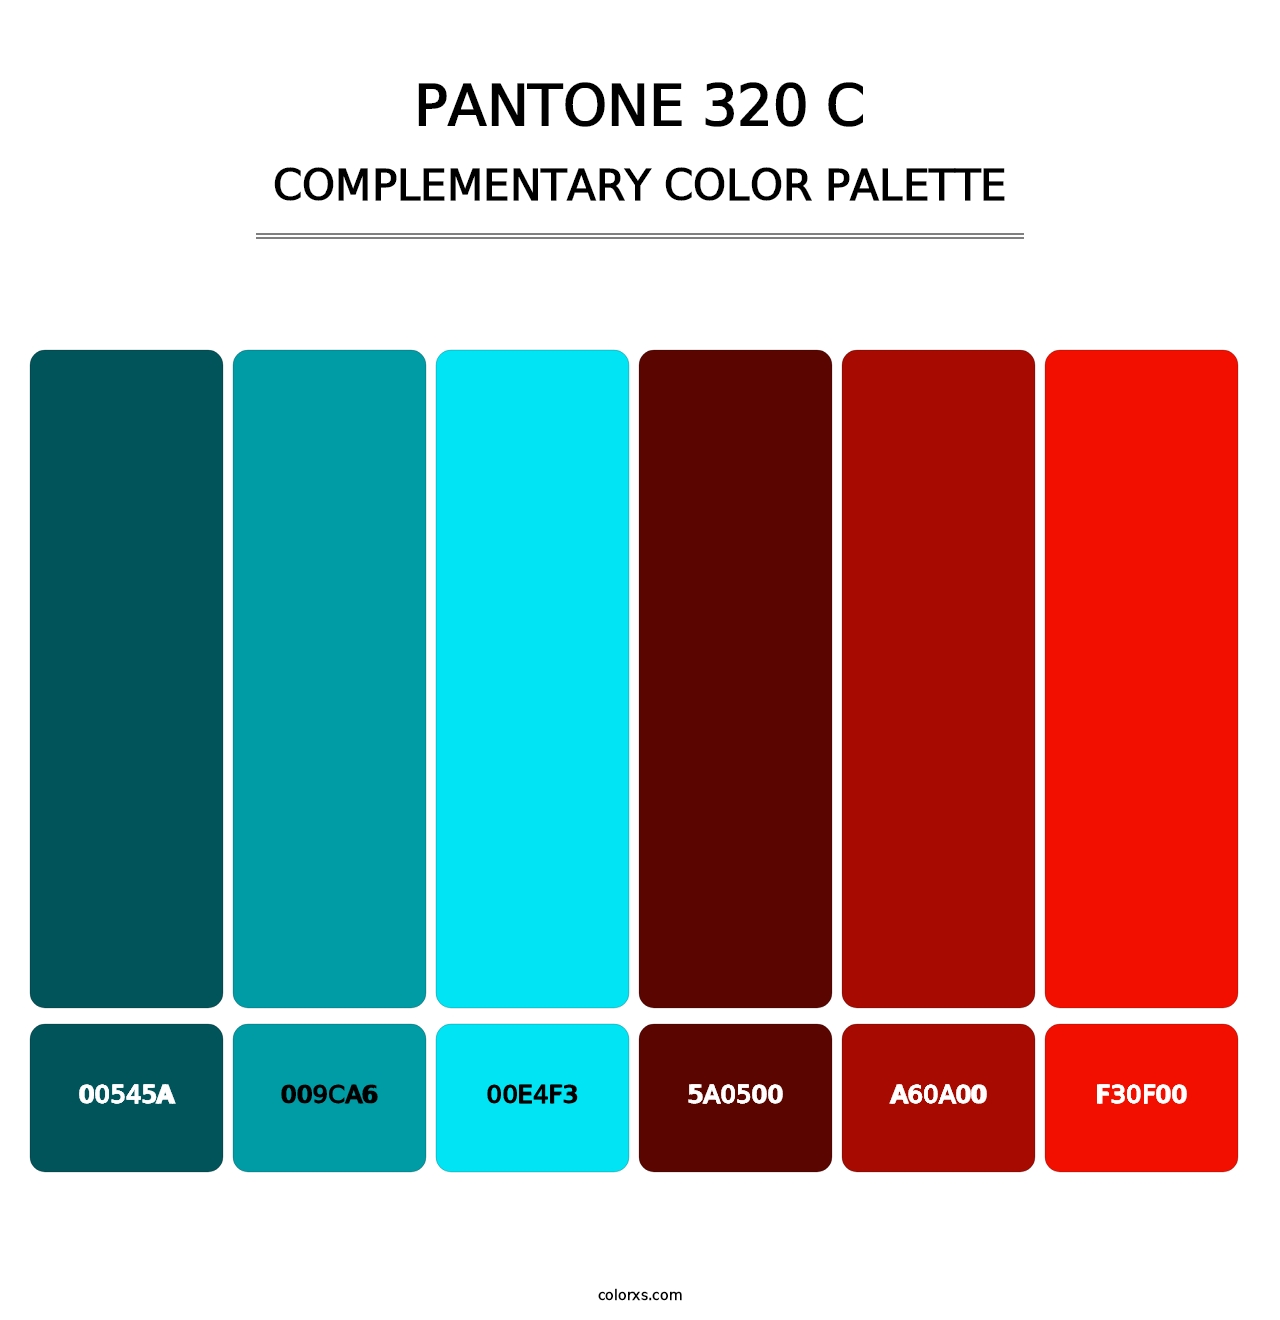 PANTONE 320 C - Complementary Color Palette